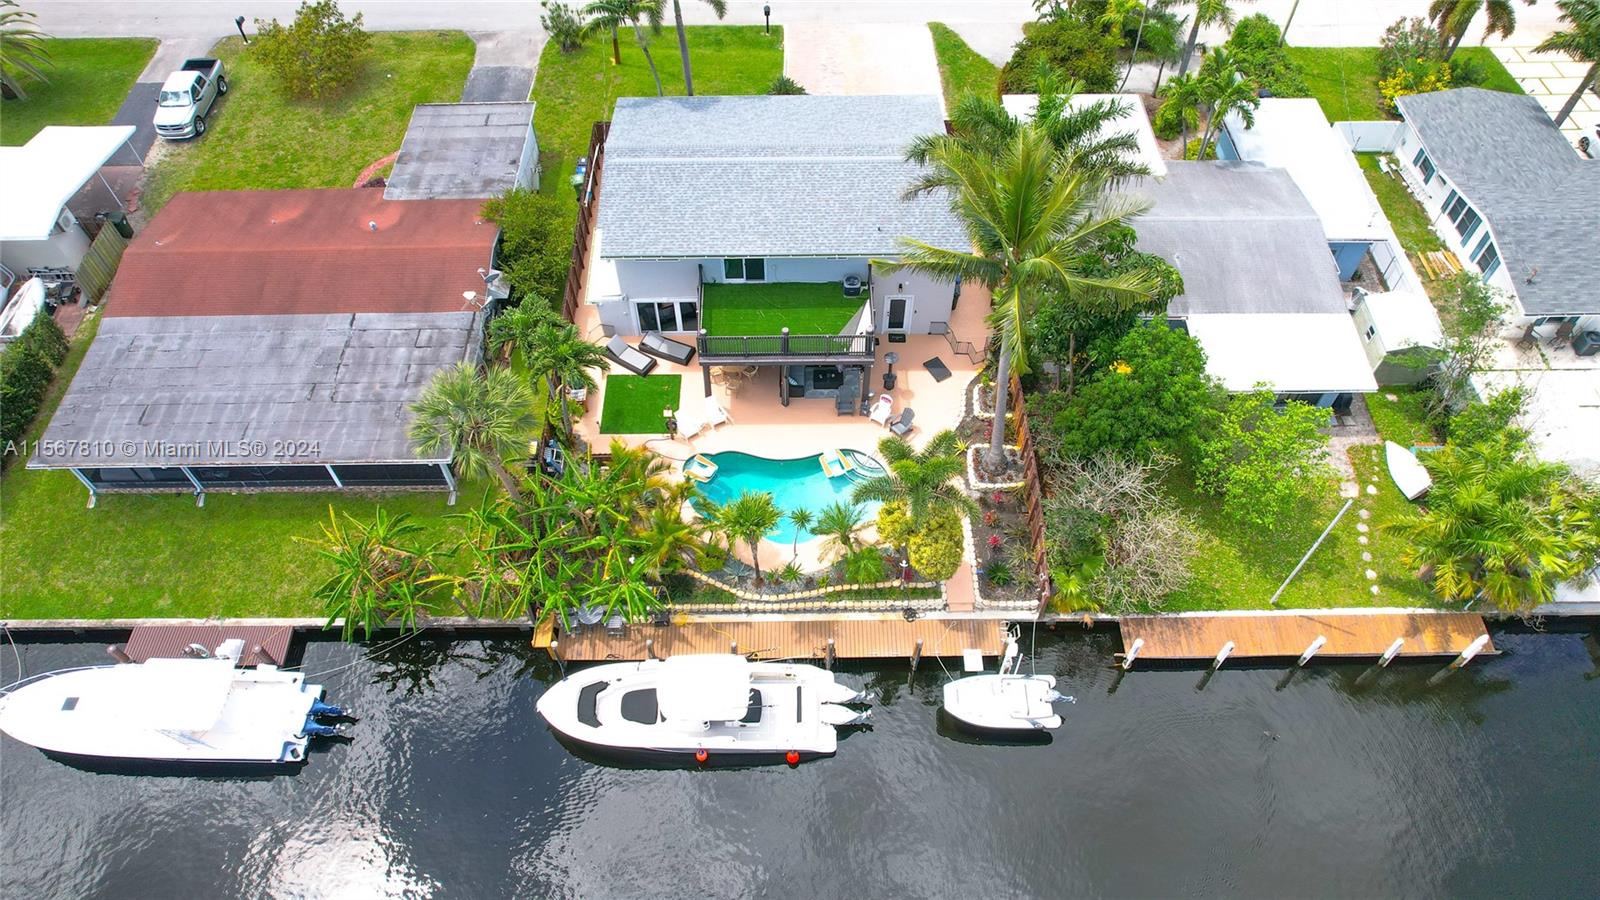 Property for Sale at 2472 Bimini Ln, Fort Lauderdale, Broward County, Florida - Bedrooms: 3 
Bathrooms: 3  - $1,425,000